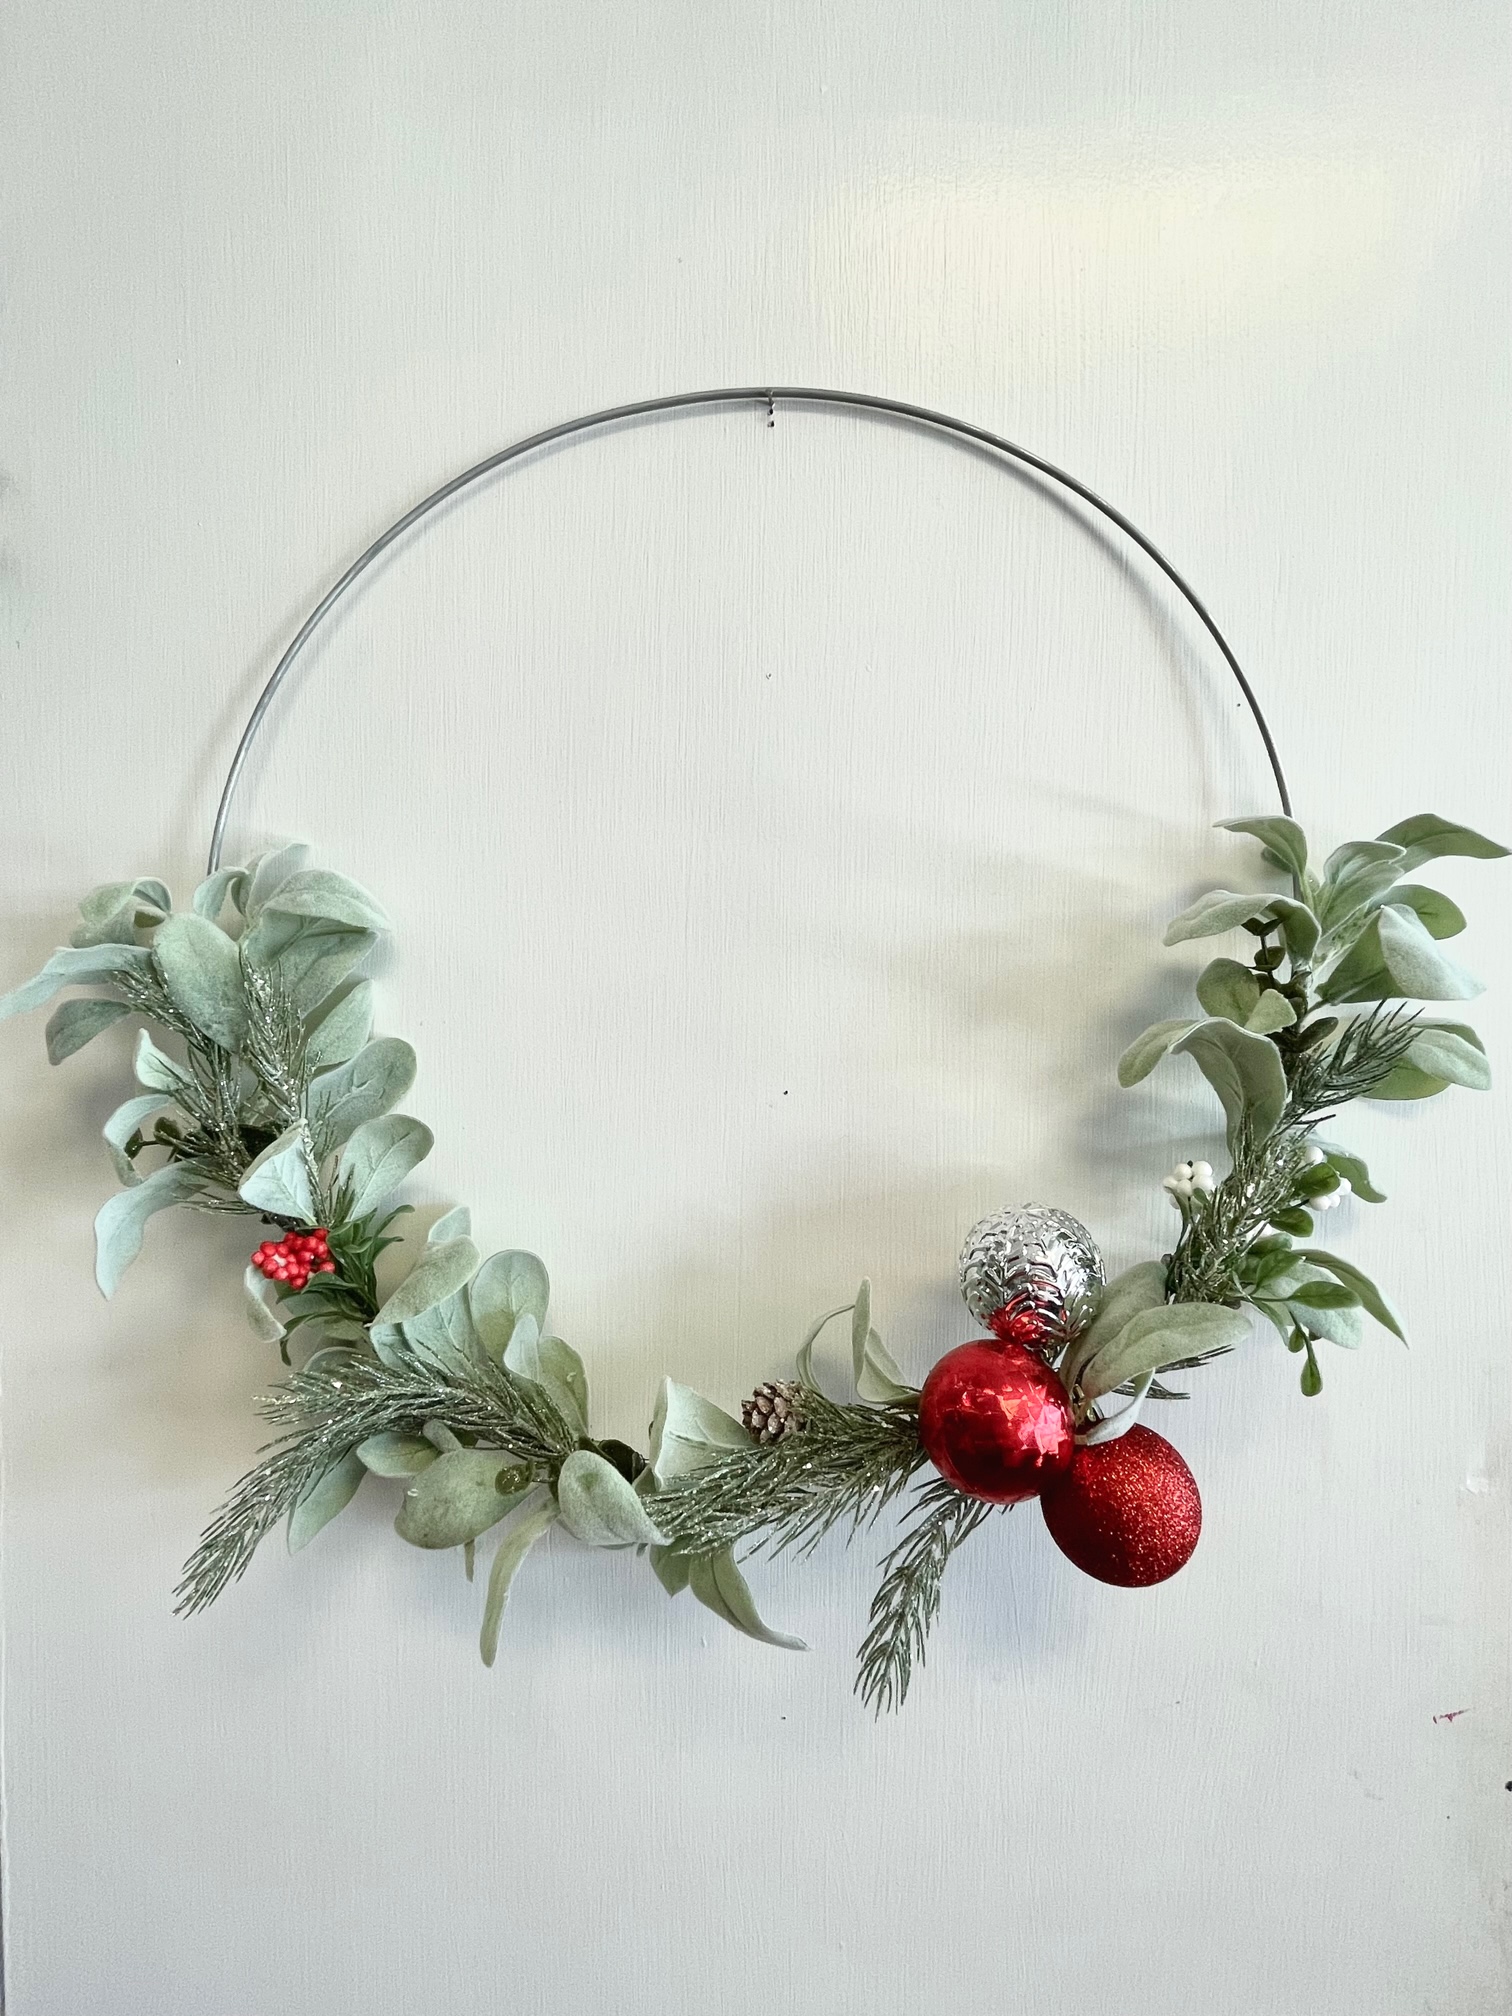 IN-STUDIO: Holiday Ornament Wreath - DIY